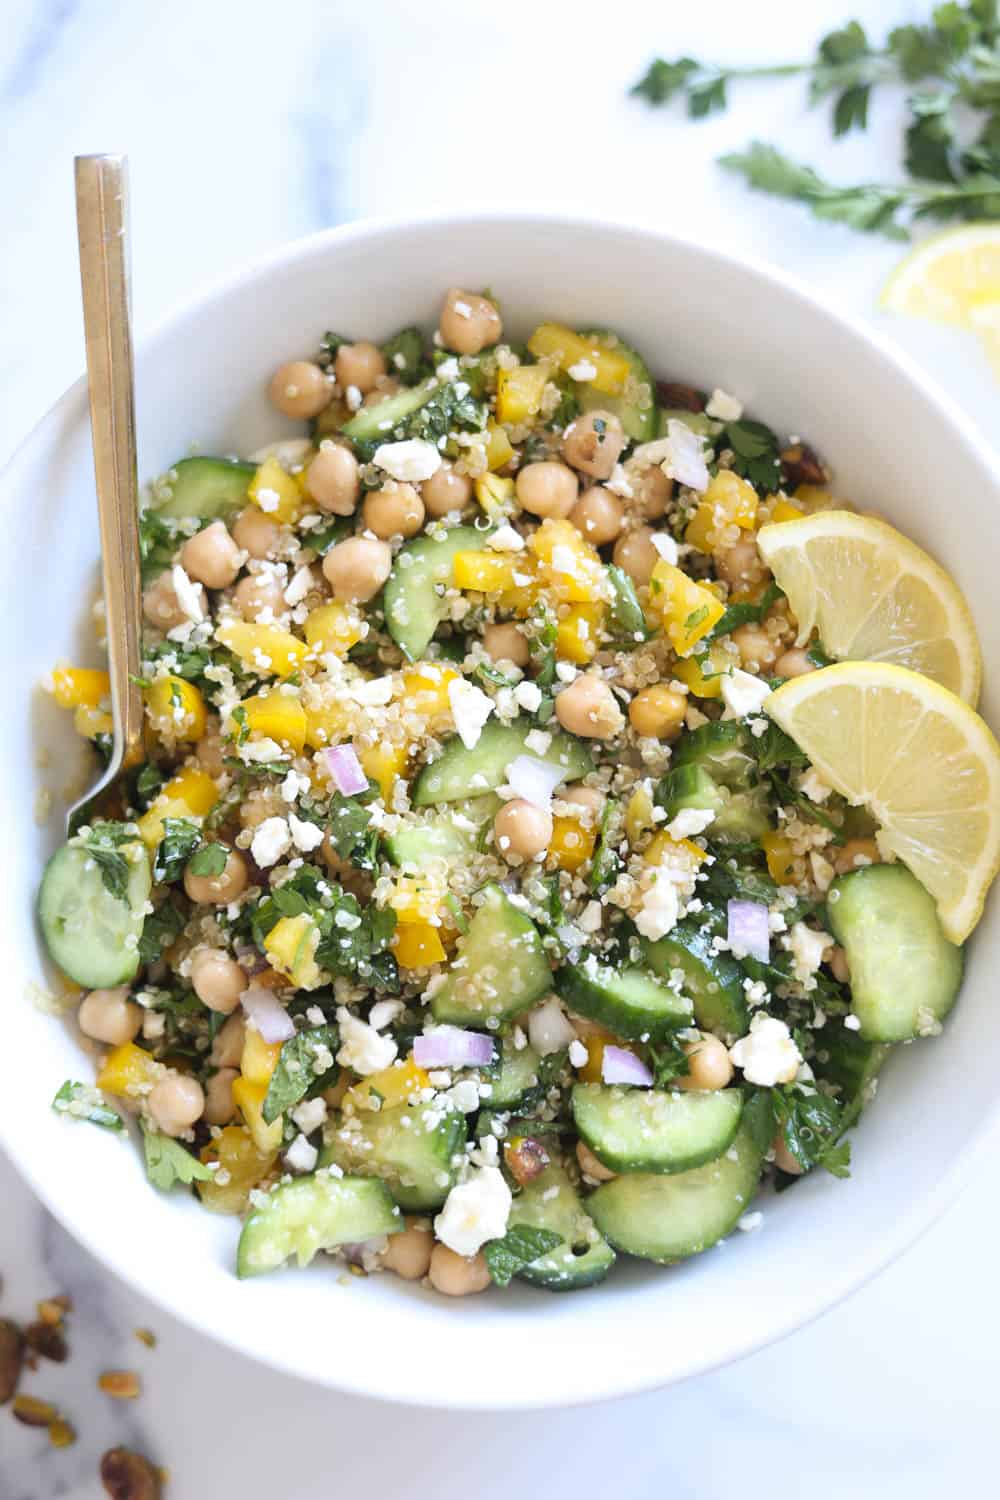 Bowl of the viral Jennifer Aniston Salad with chickpeas, quinoa, fresh veggies, and a lemon vinaigrette.